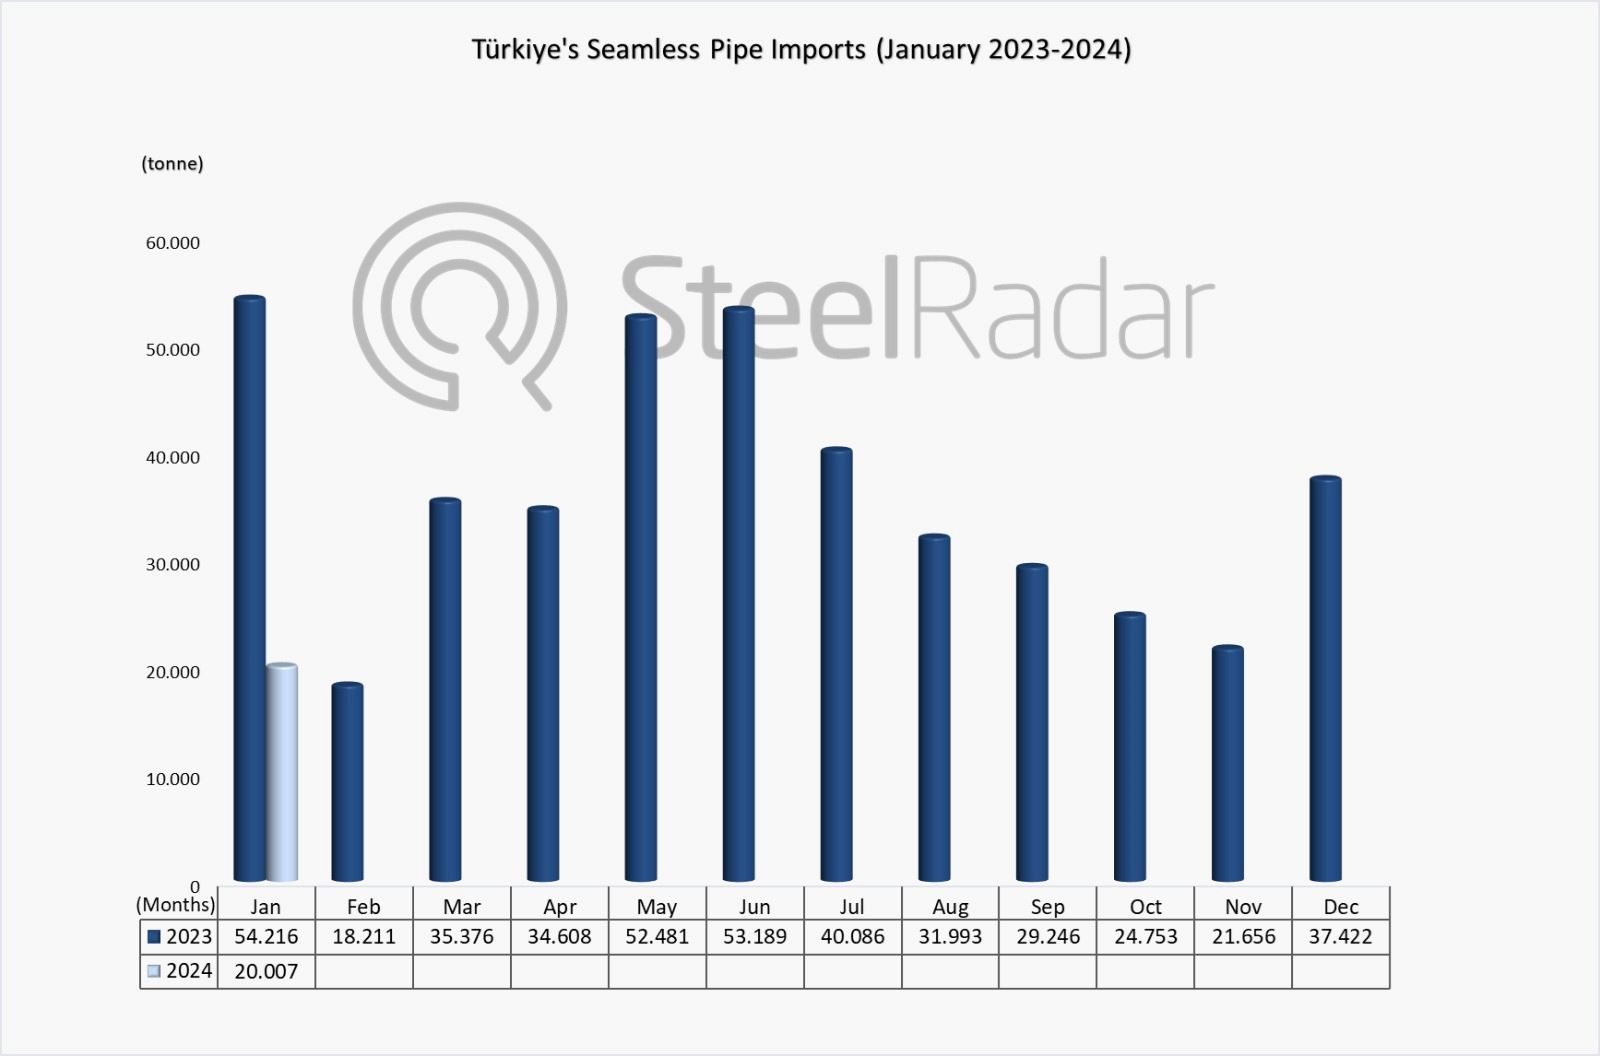 Seamless pipe imports of Türkiye decreased by 63% in January